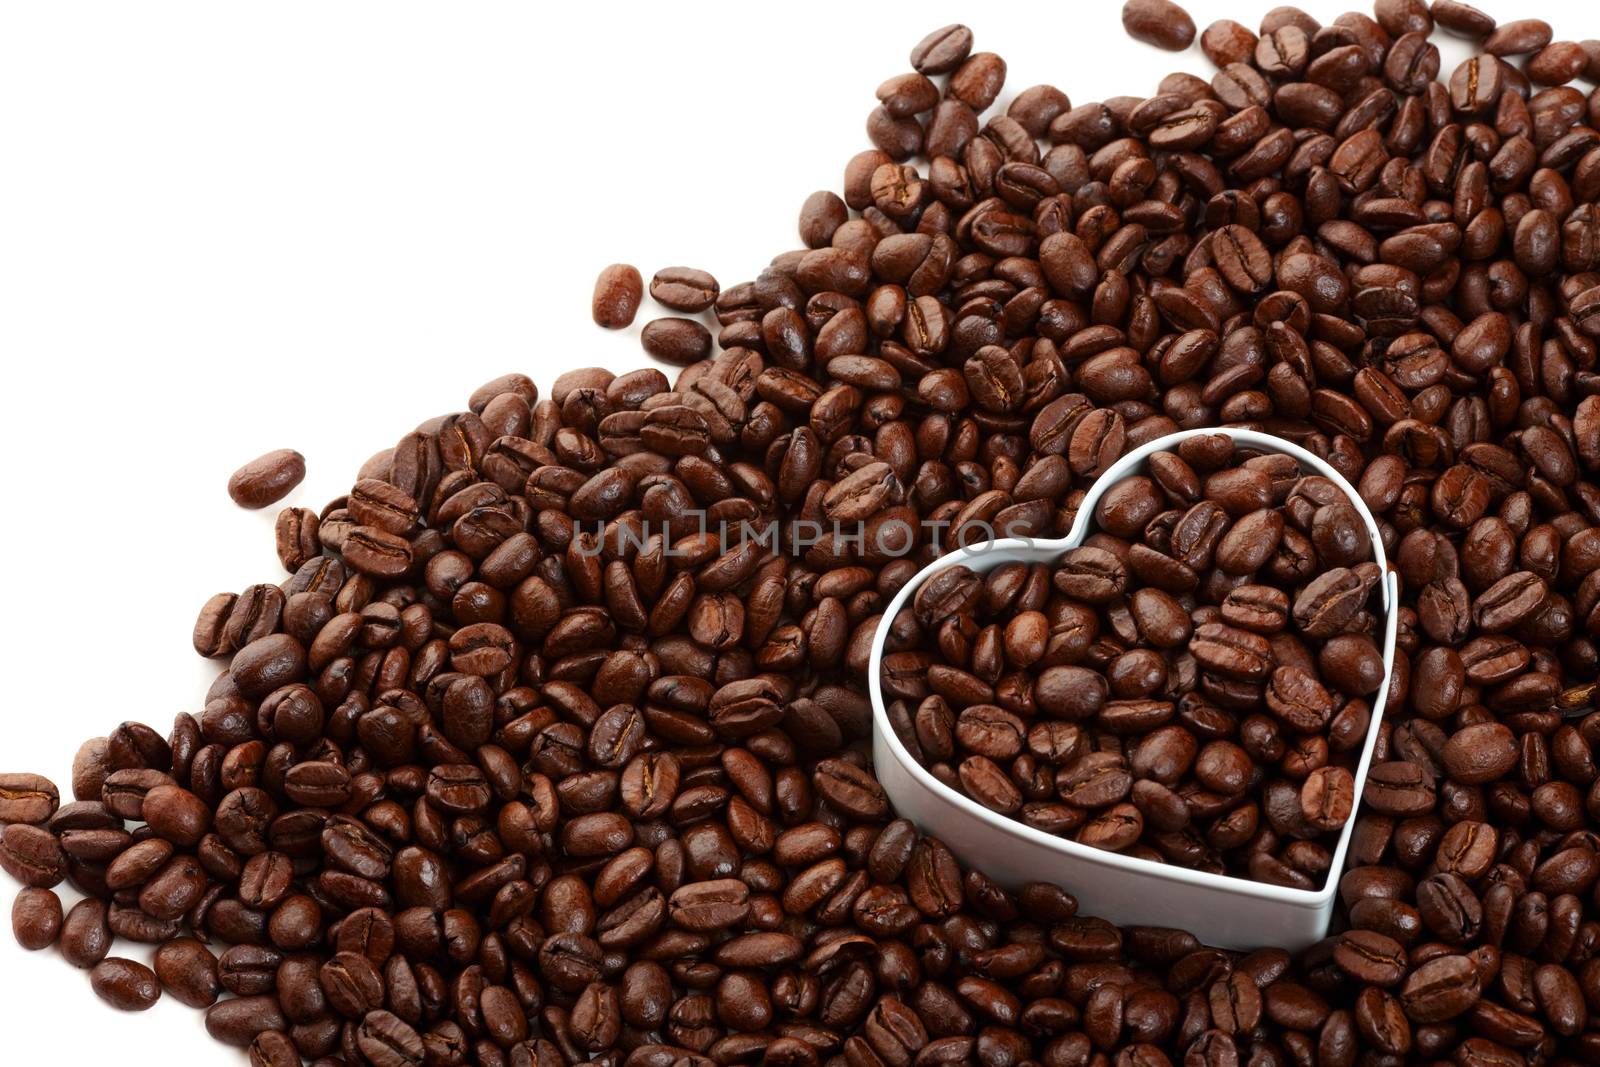 I Love Coffee by songbird839